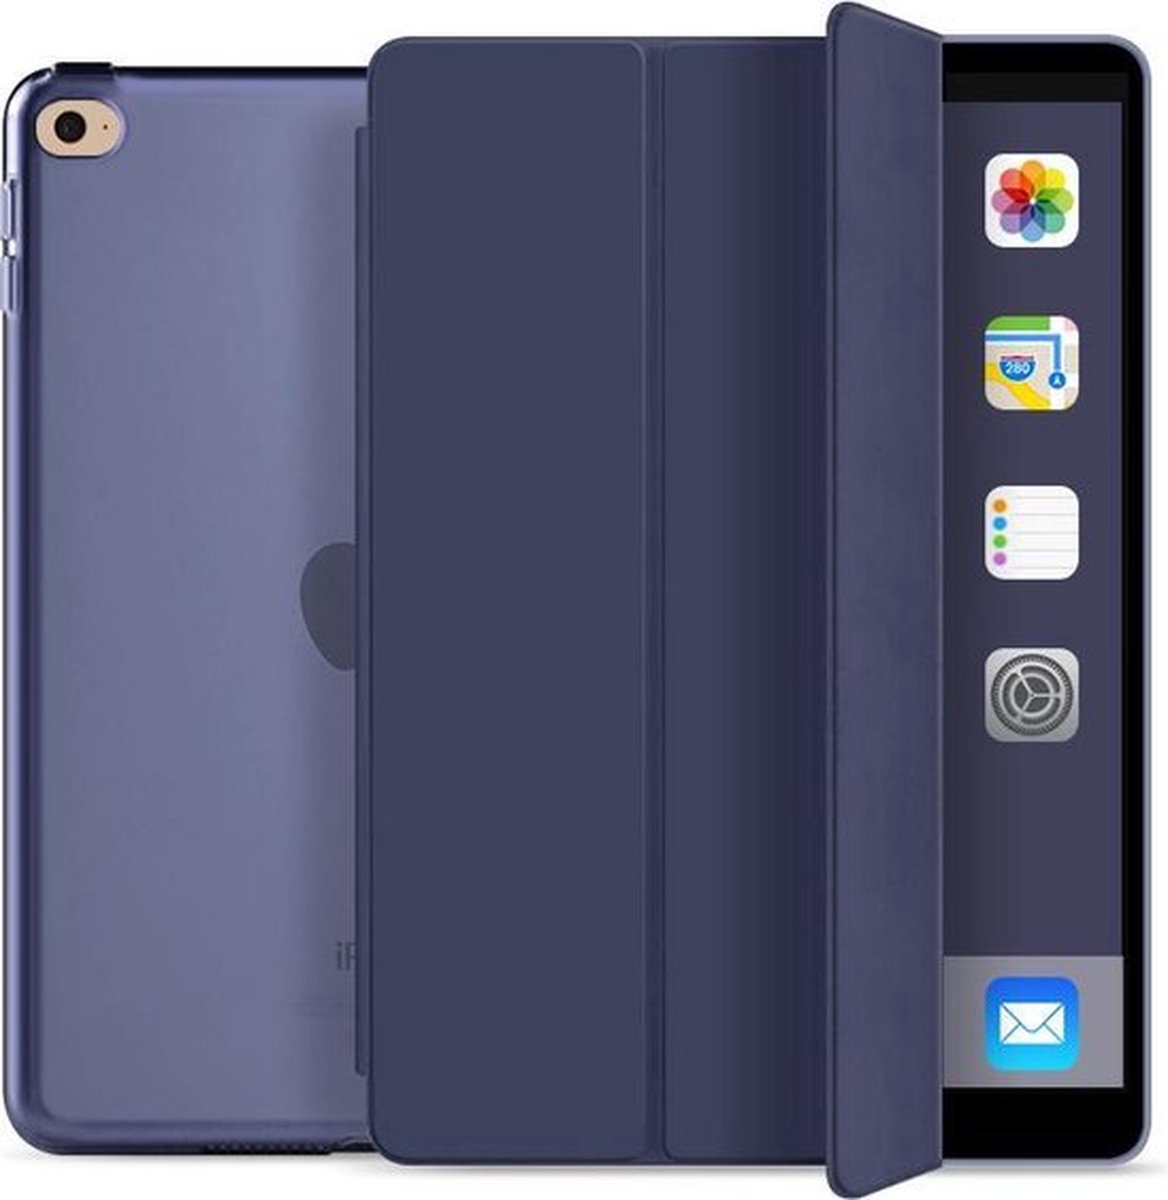 Ipad mini 5 hardcover – Ipad hoes – hard cover – Hoes voor iPad mini 5– Tablet beschermer - navy